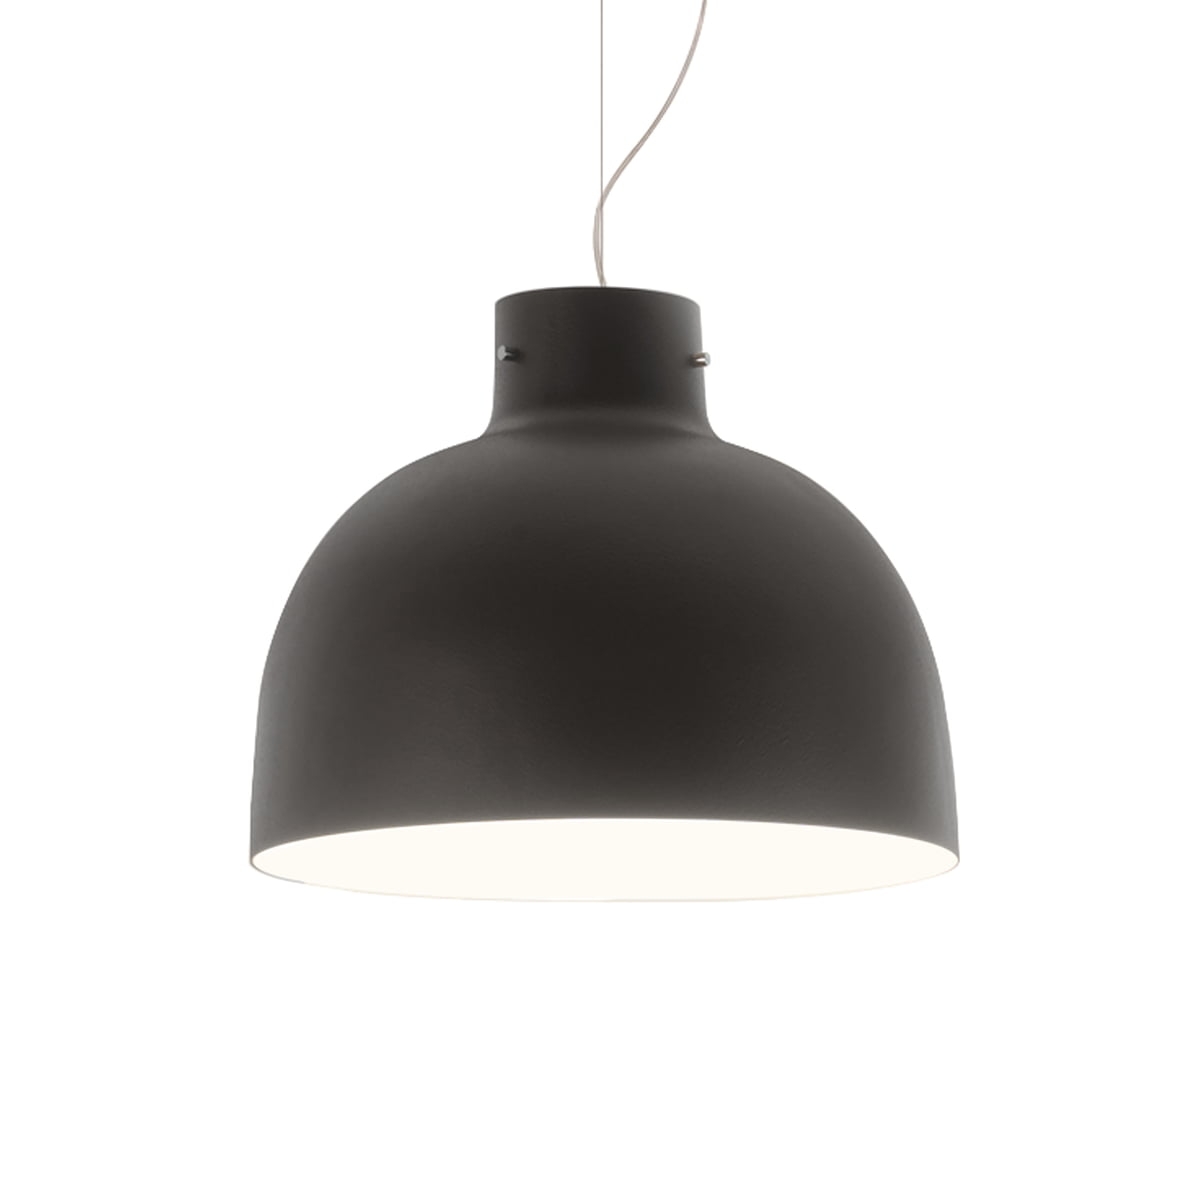 Suspensie Kartell Bellissima design Ferruccio Laviani LED 15W d50cm negru Kartell